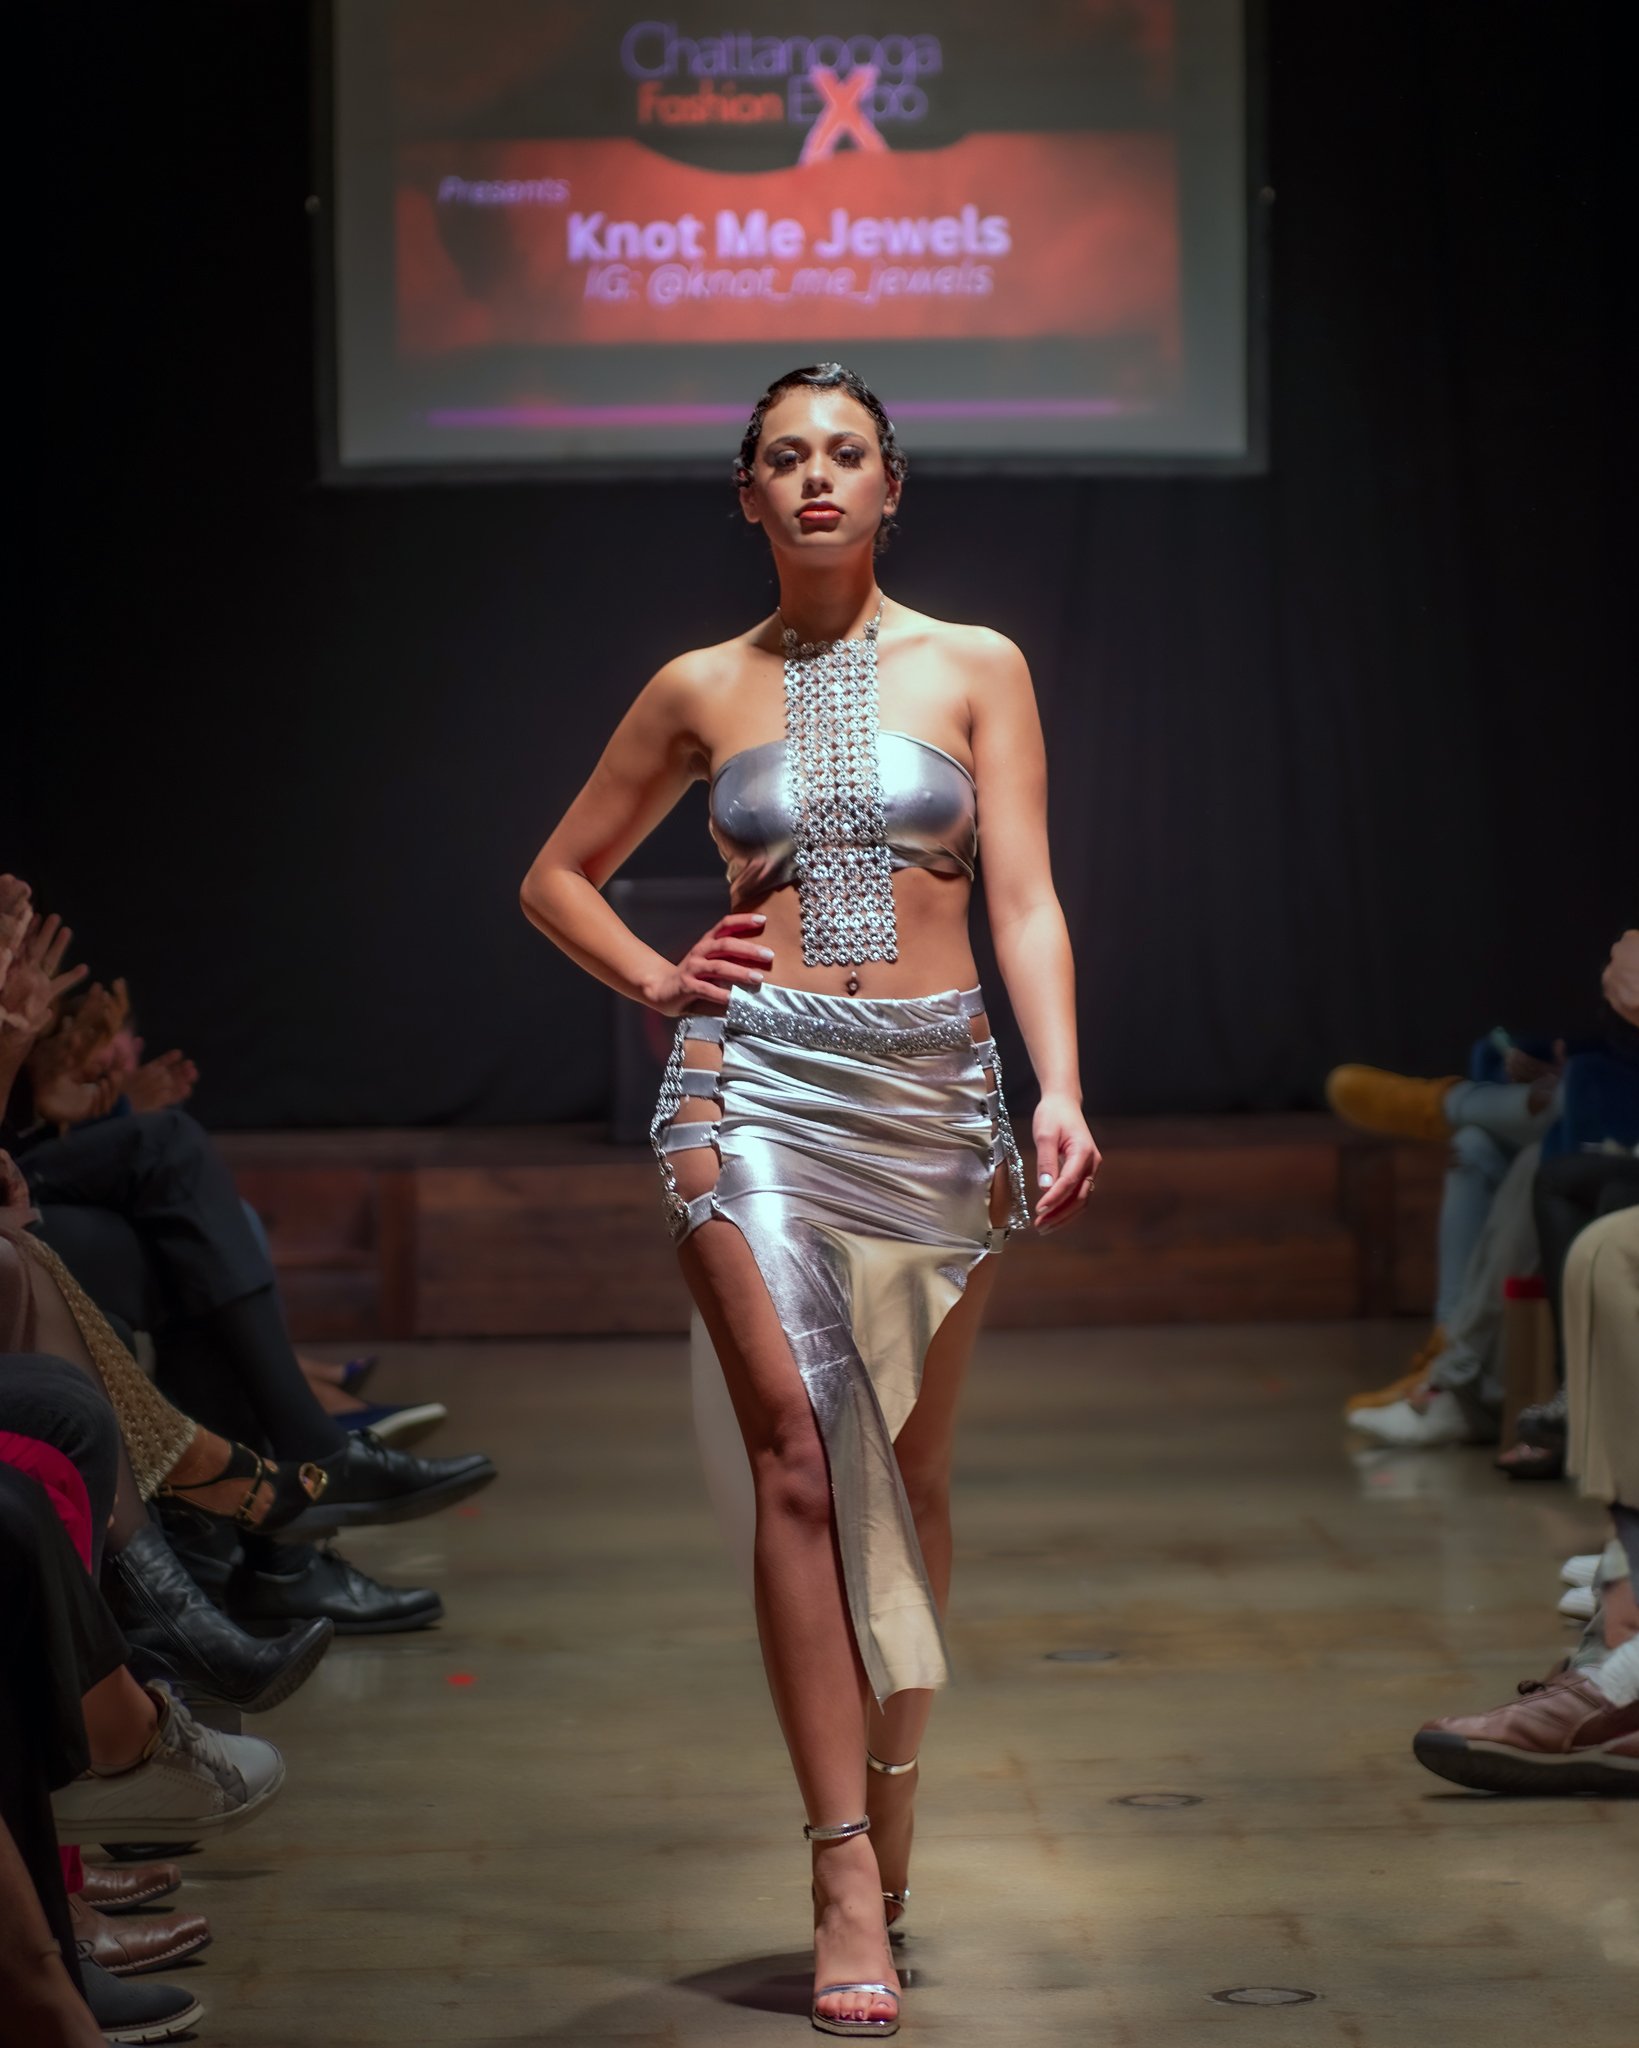 Designer Knot Me Jewels- Model Bianca Bradshaw- Photo by David Tedder.jpg